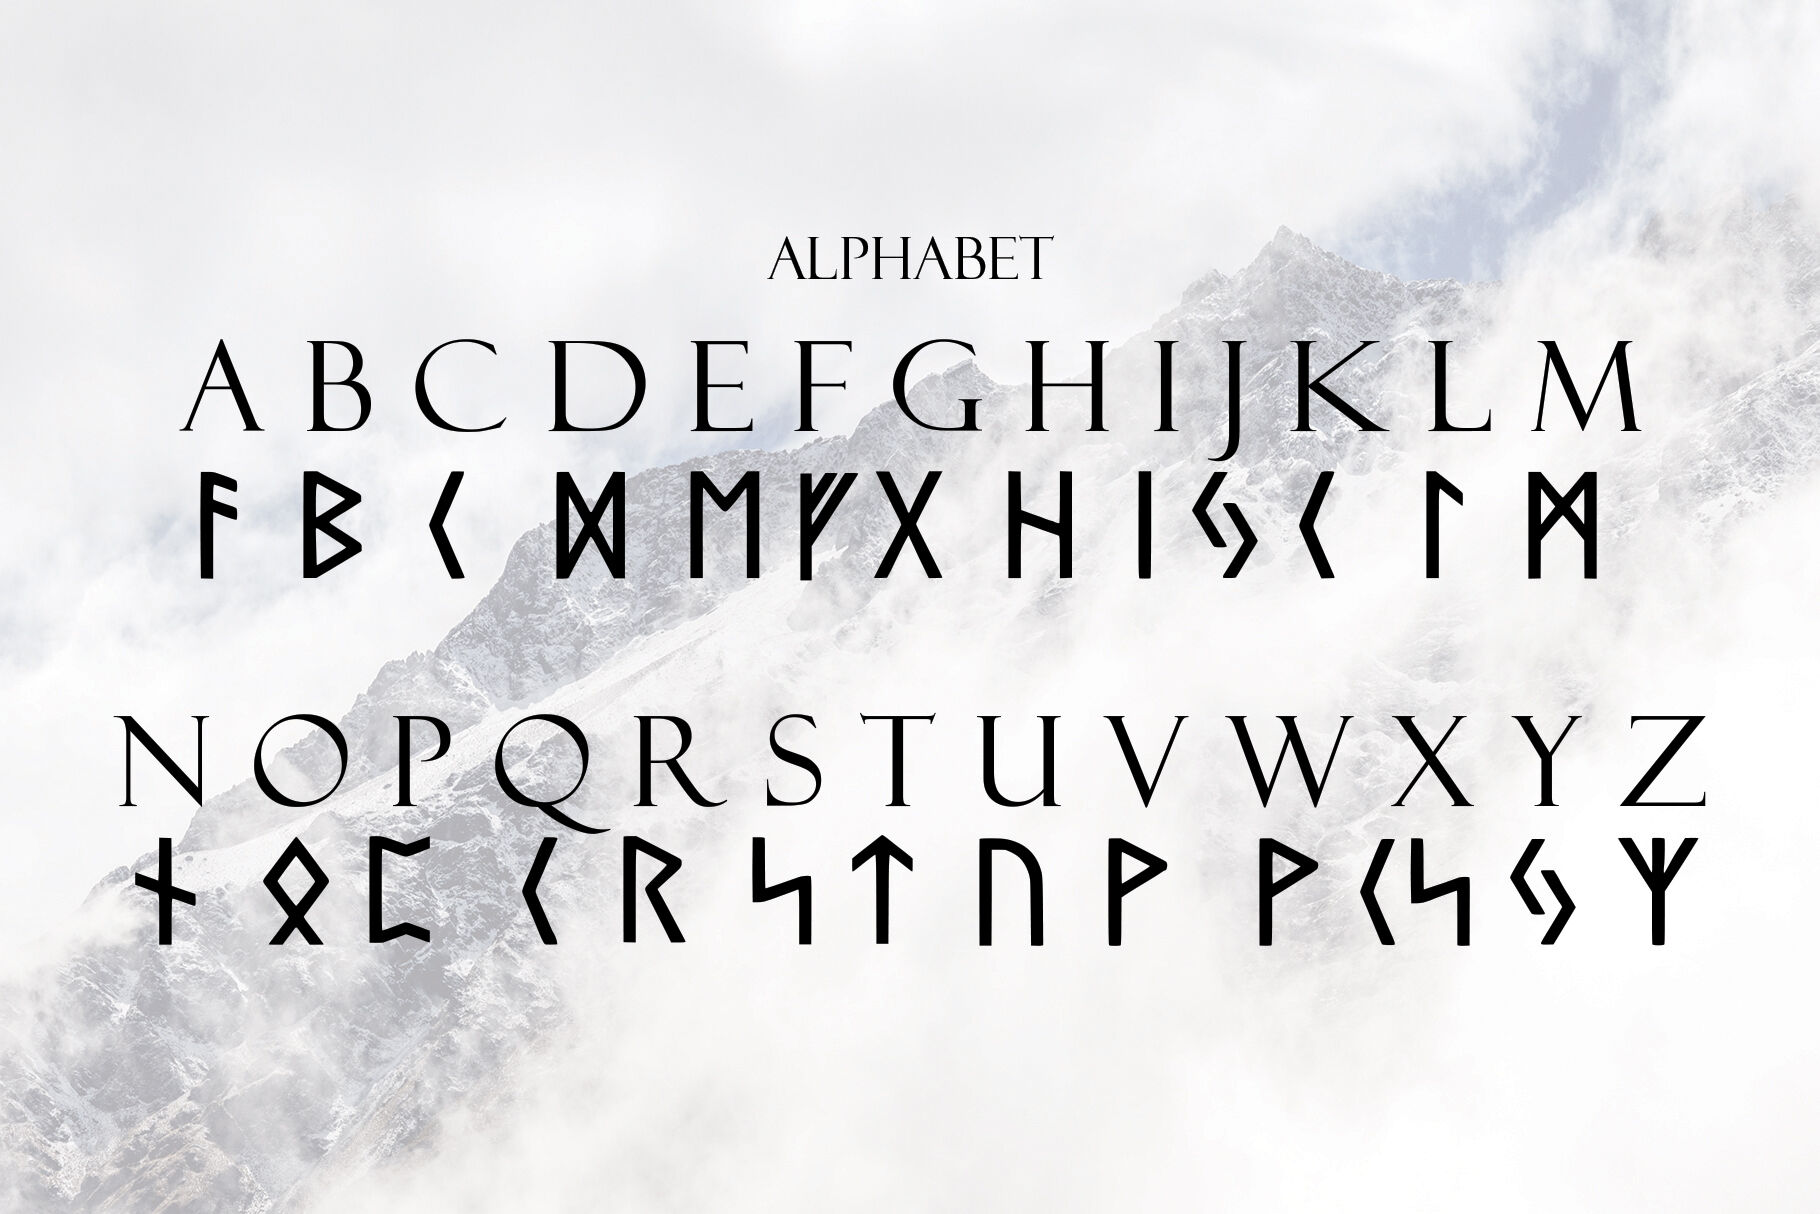 Norse Elder Futhark Typeface By Dene Studios Thehungryjpeg Com